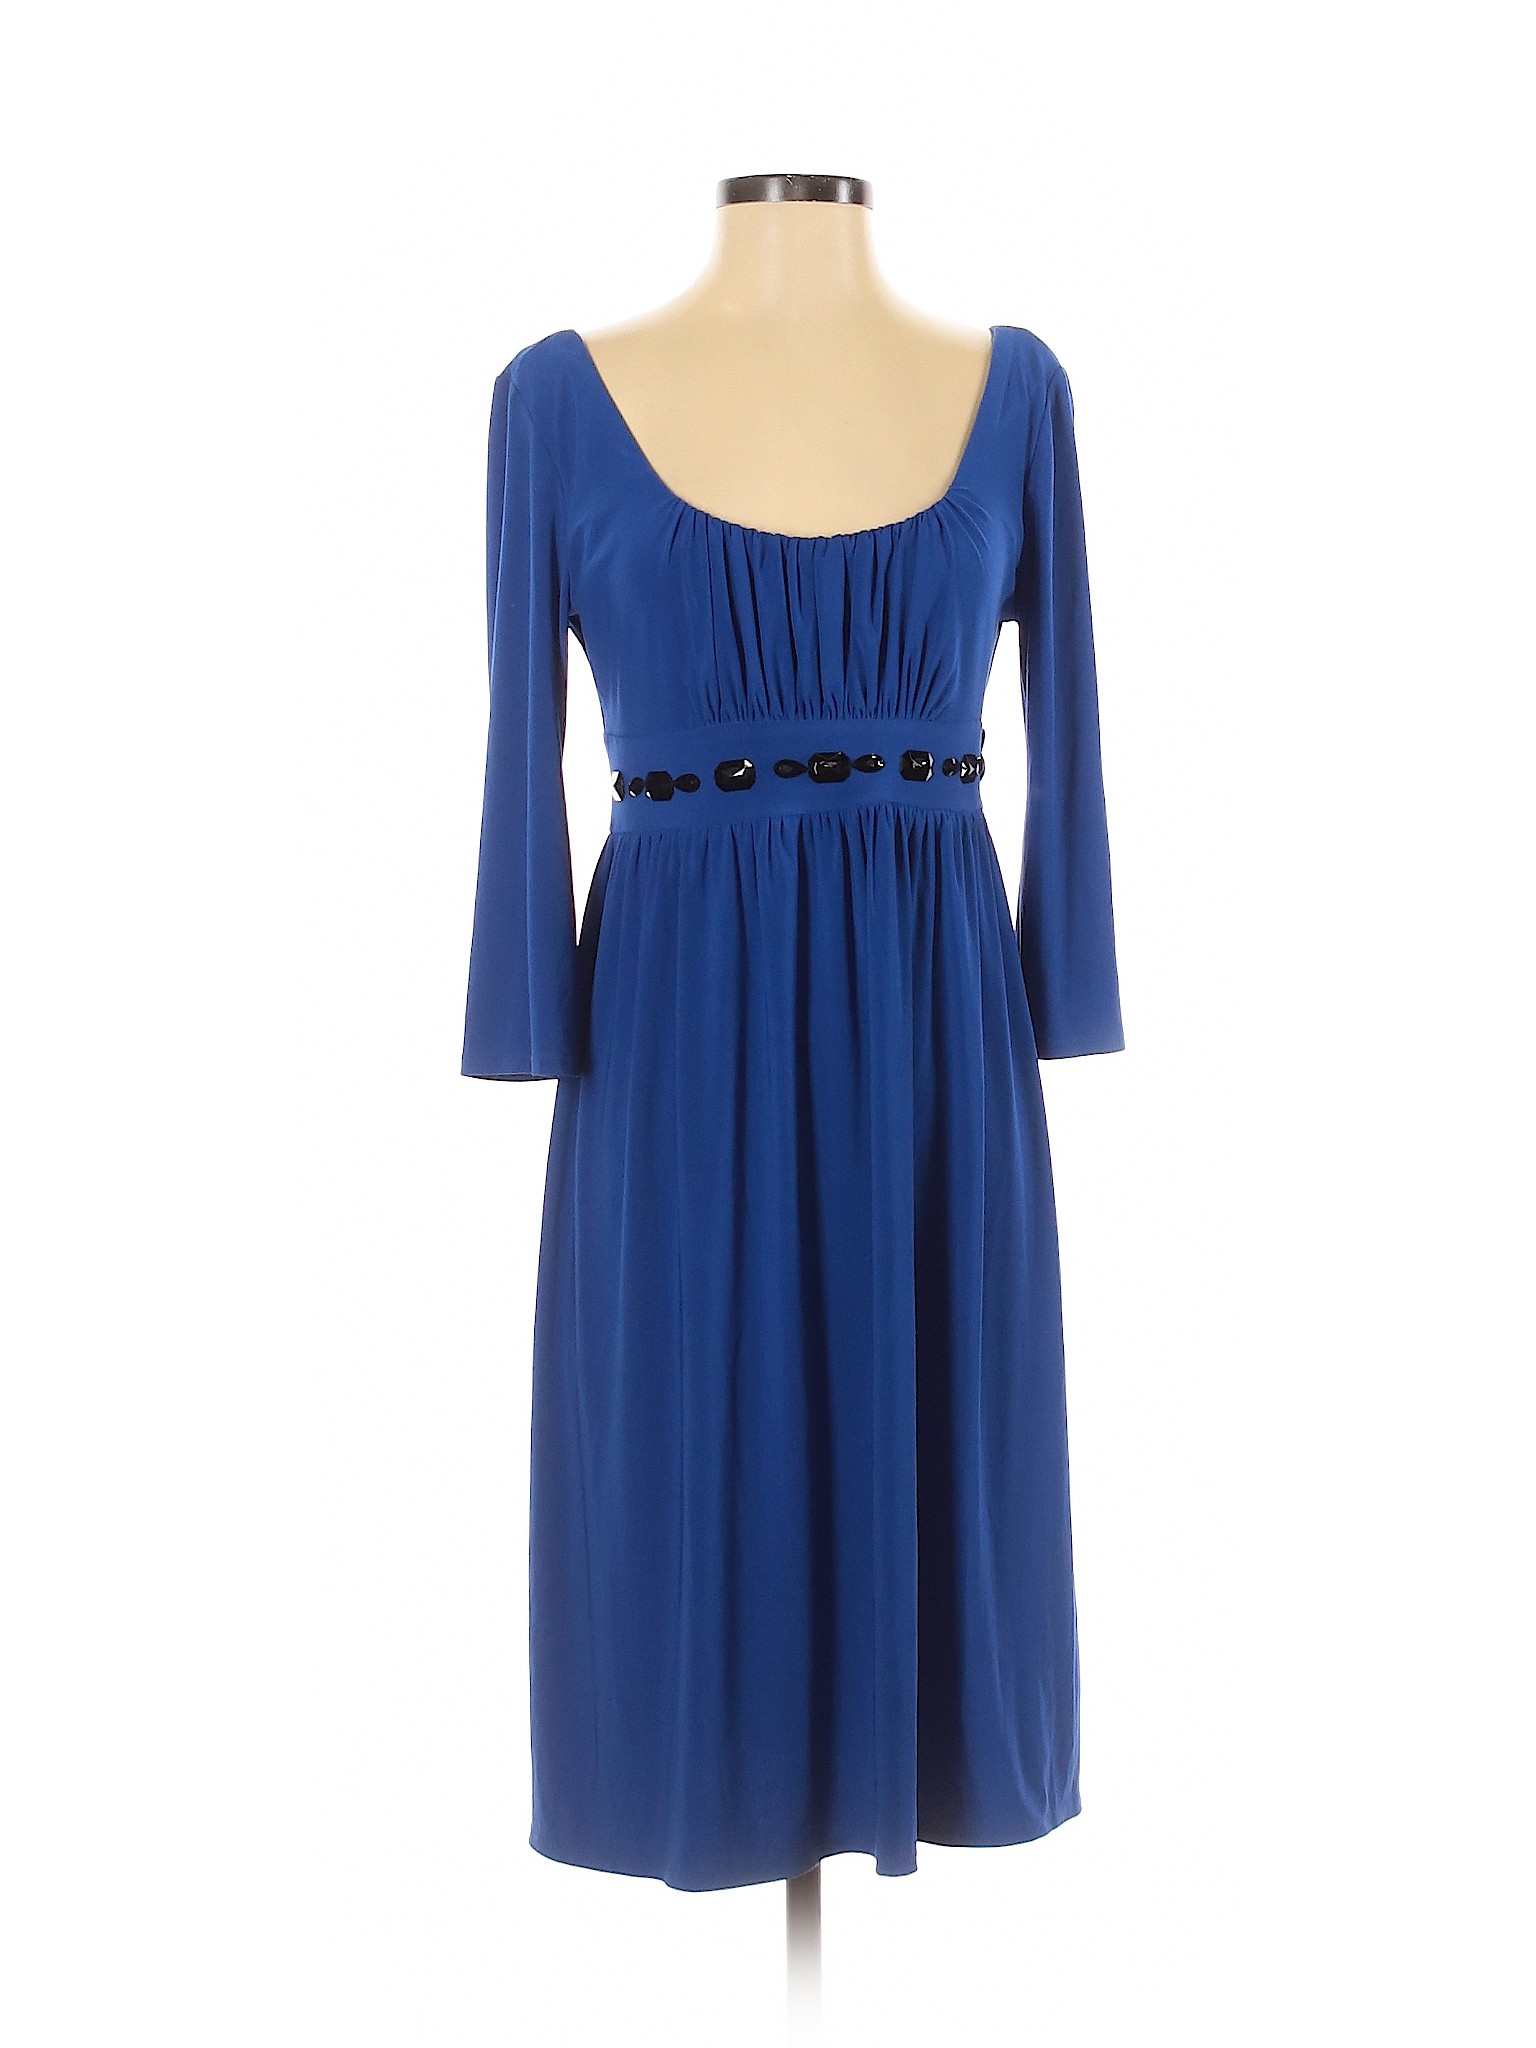 NWT Blu Sage Women Blue Cocktail Dress S | eBay